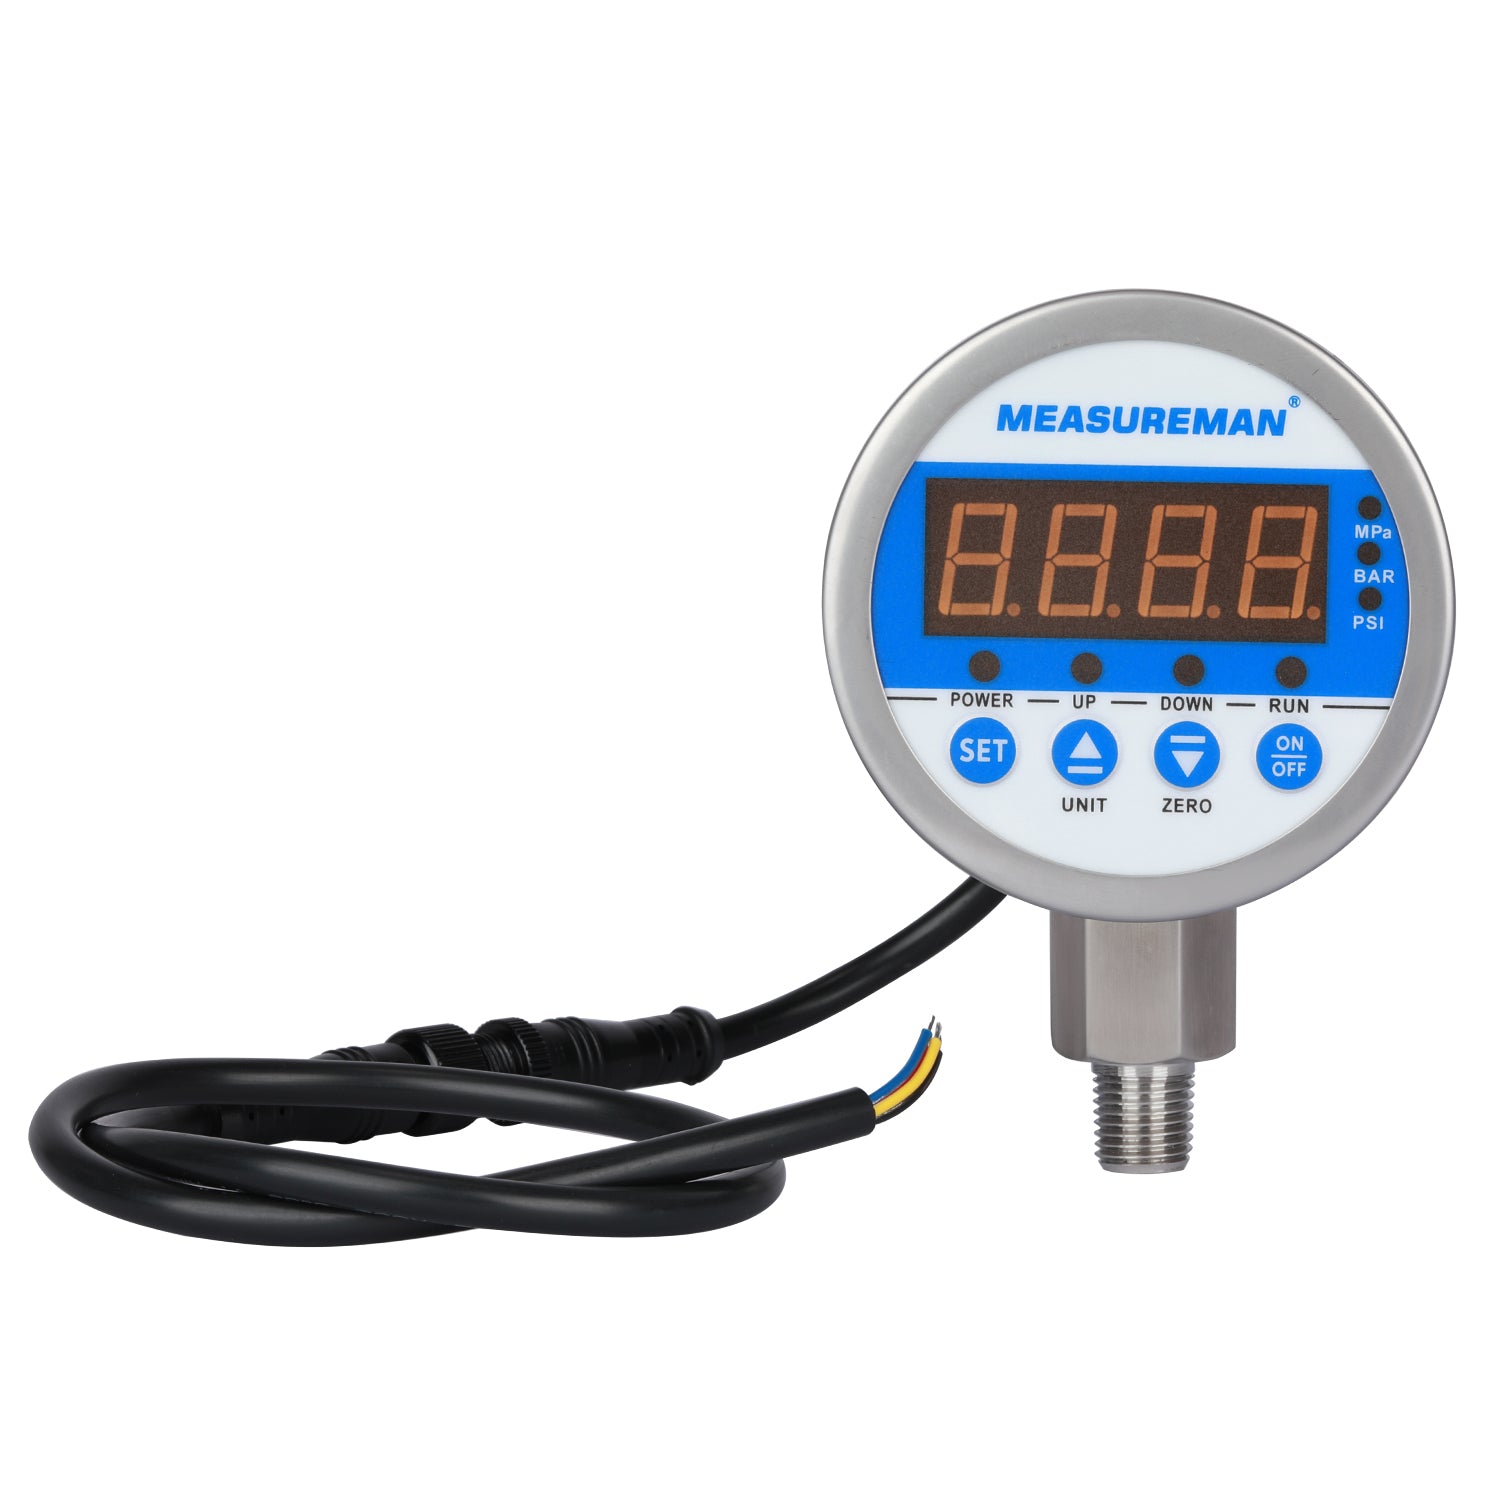 Air/Fuel/Water Digital Display Manometer Electric Contact LED